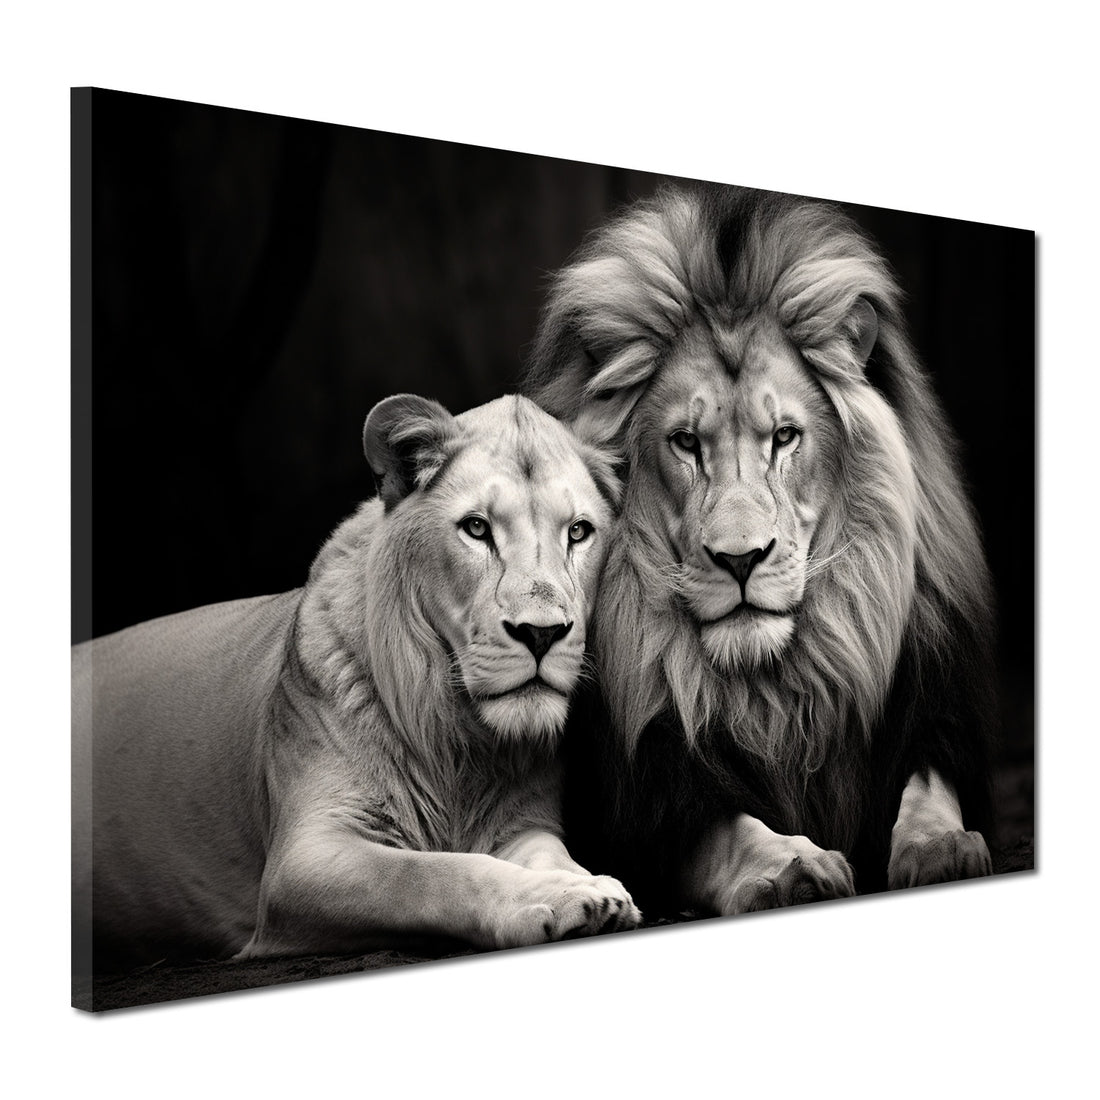 Wandbild Löwen Beautiful Lions schwarz weiß